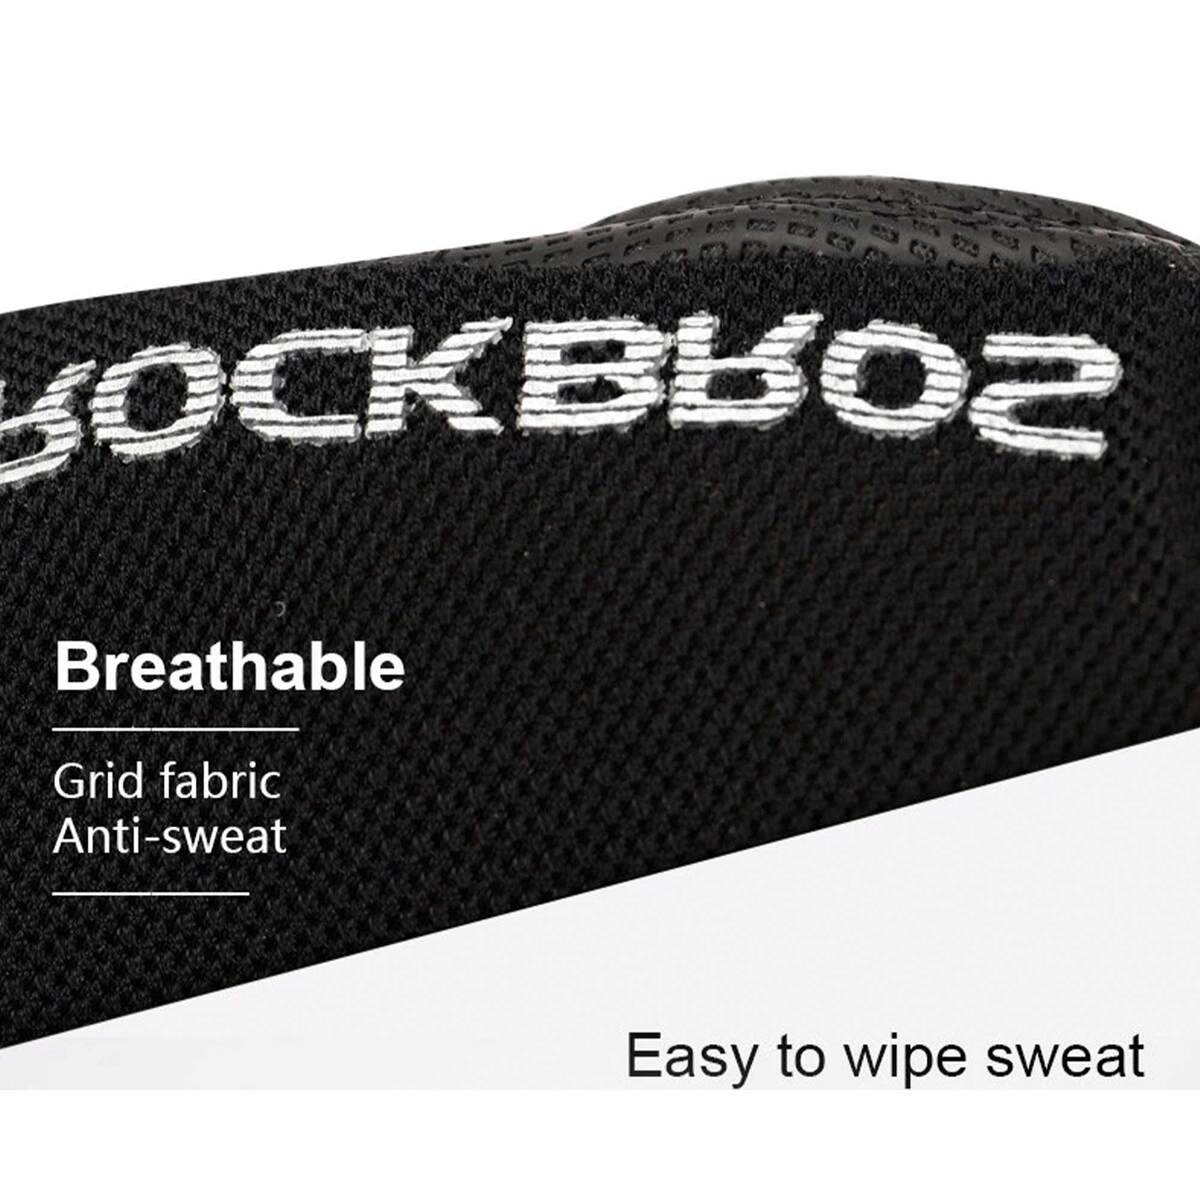 ROCKBROS Half Finger Cycling Gloves Black S106BK Extra Large